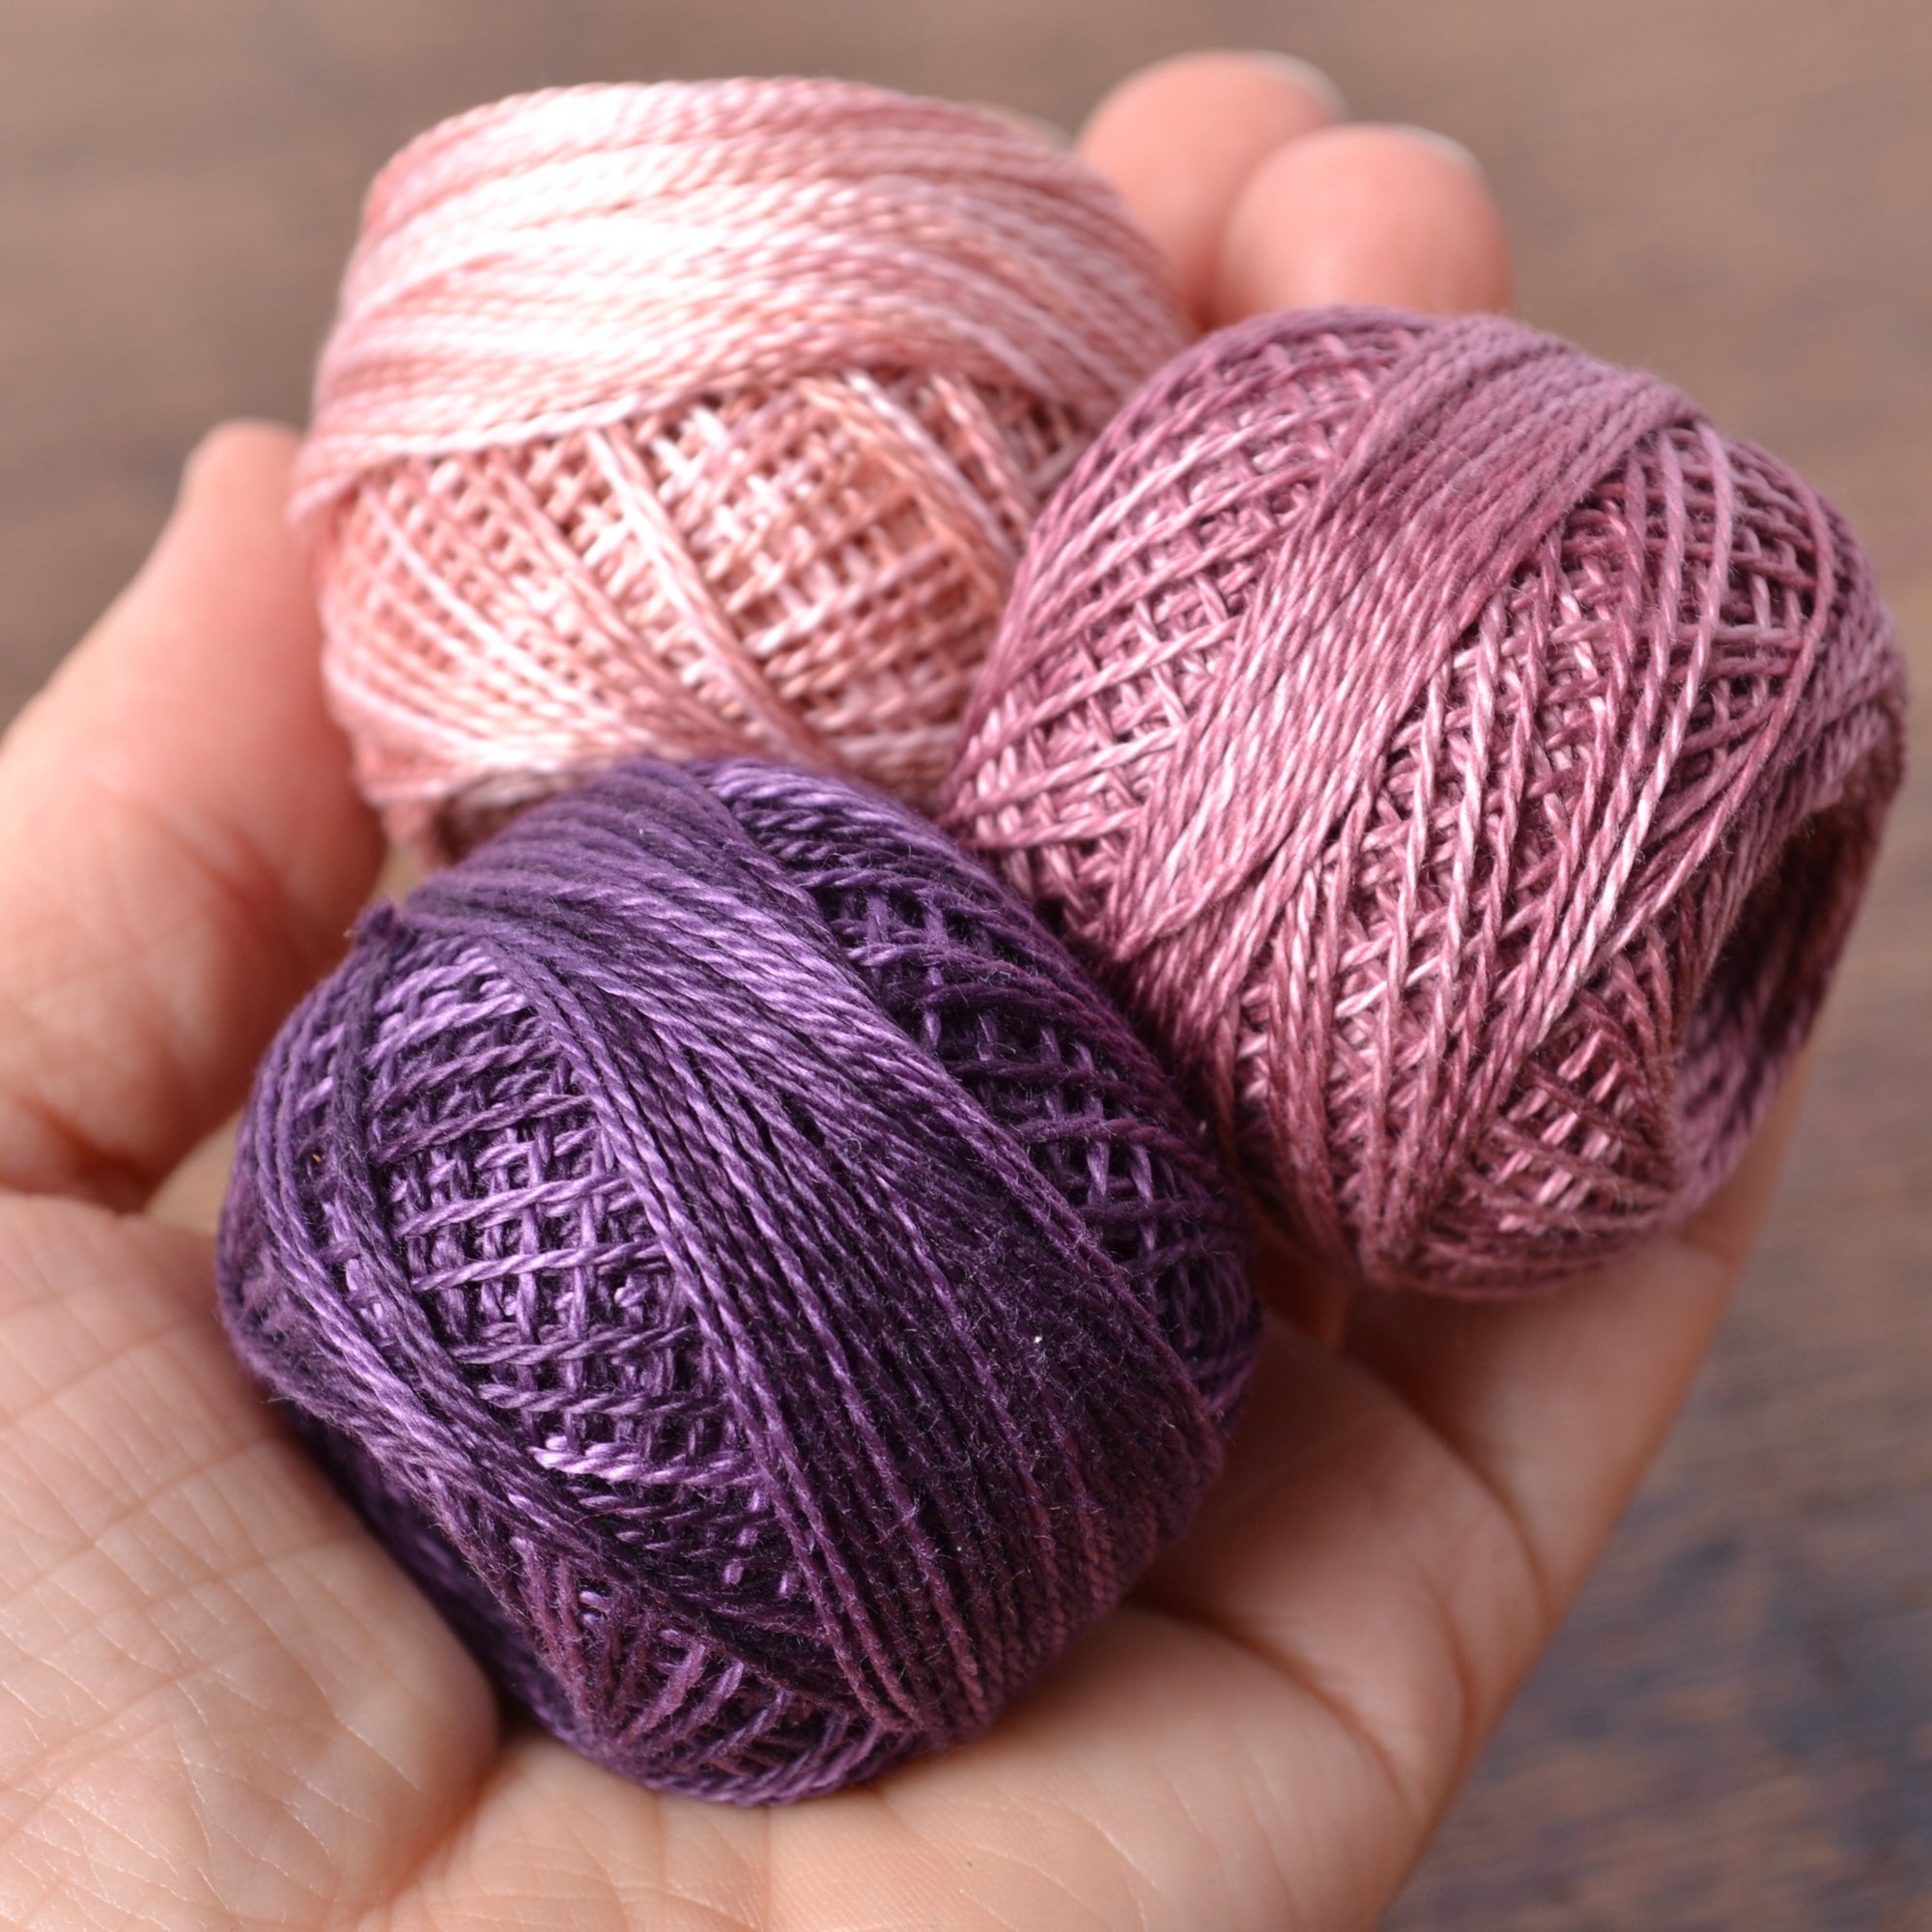 Purple and pink Valdani threads